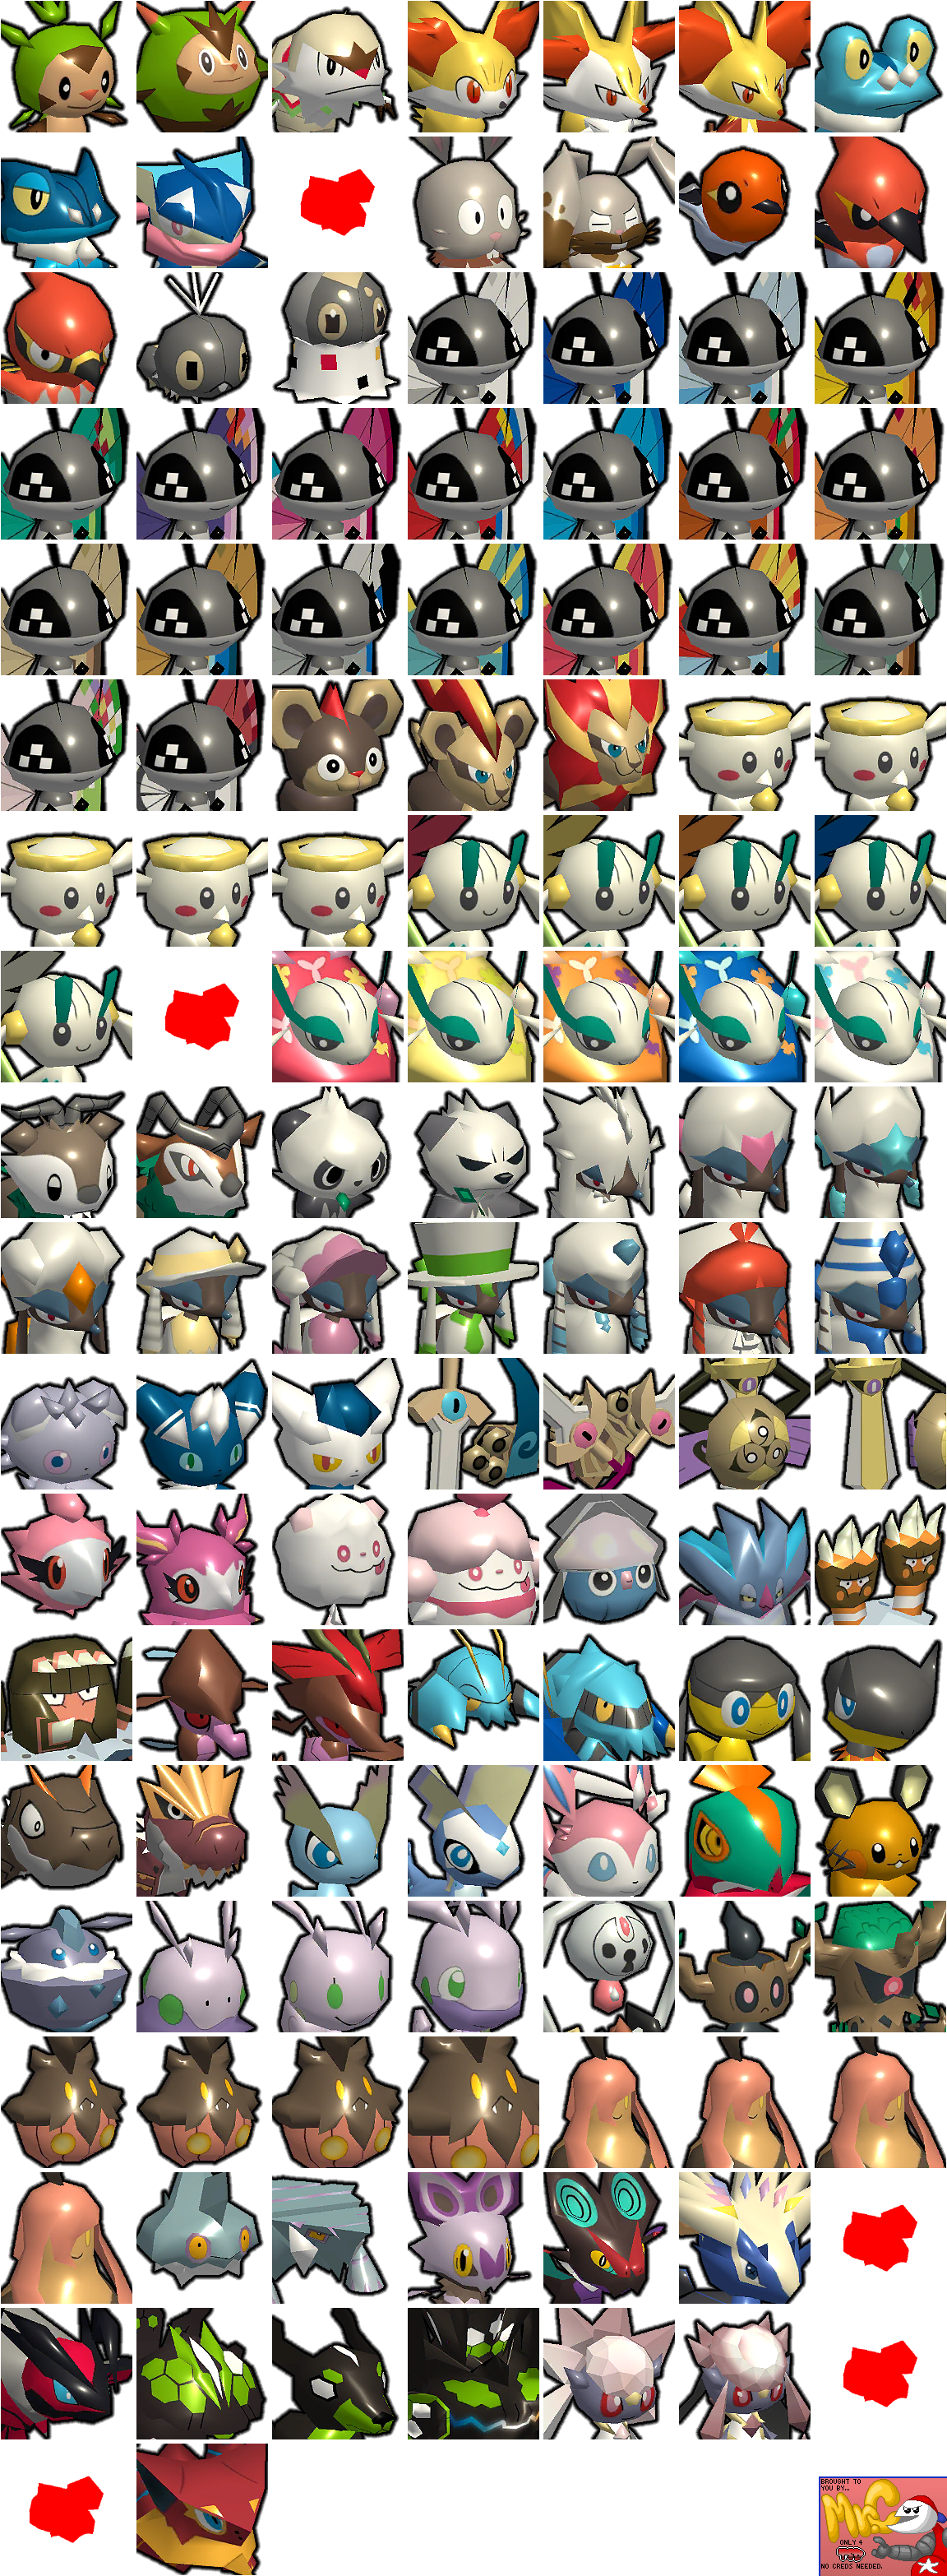 Pokémon Rumble Rush - Pokémon Icons (6th Generation)